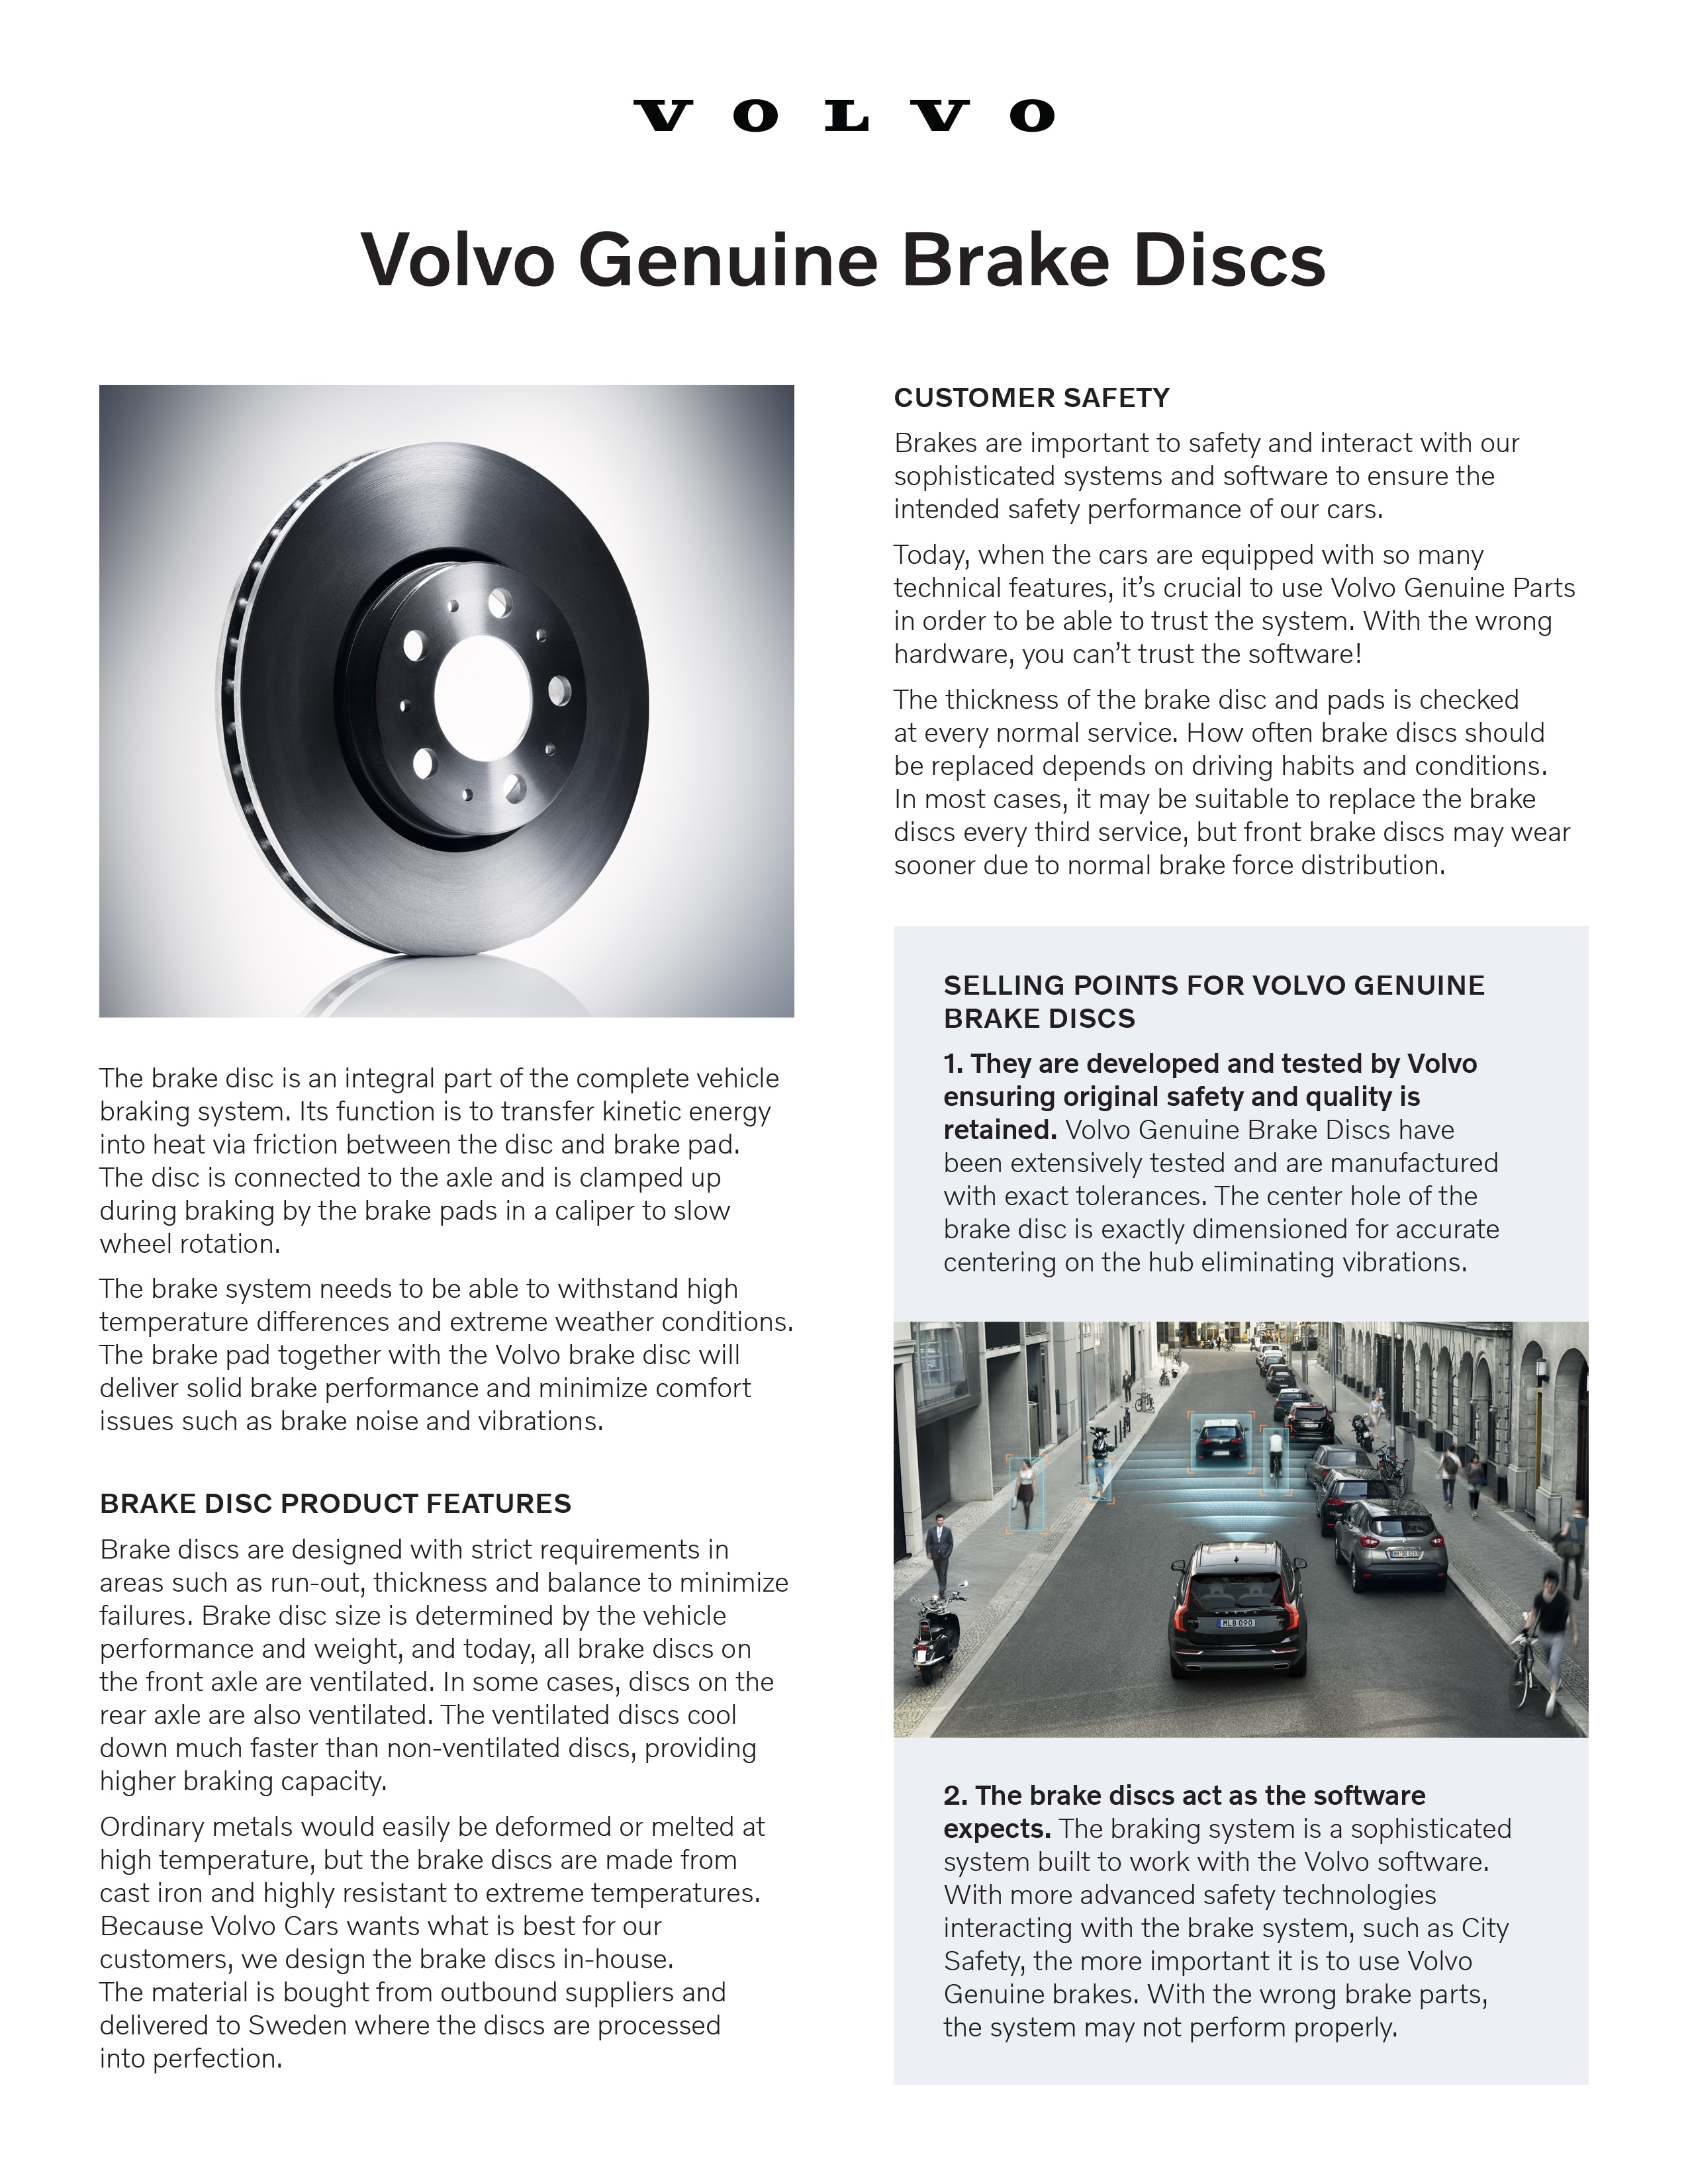 Research Volvo Genuine Brakes Discs at Culver City Volvo Cars